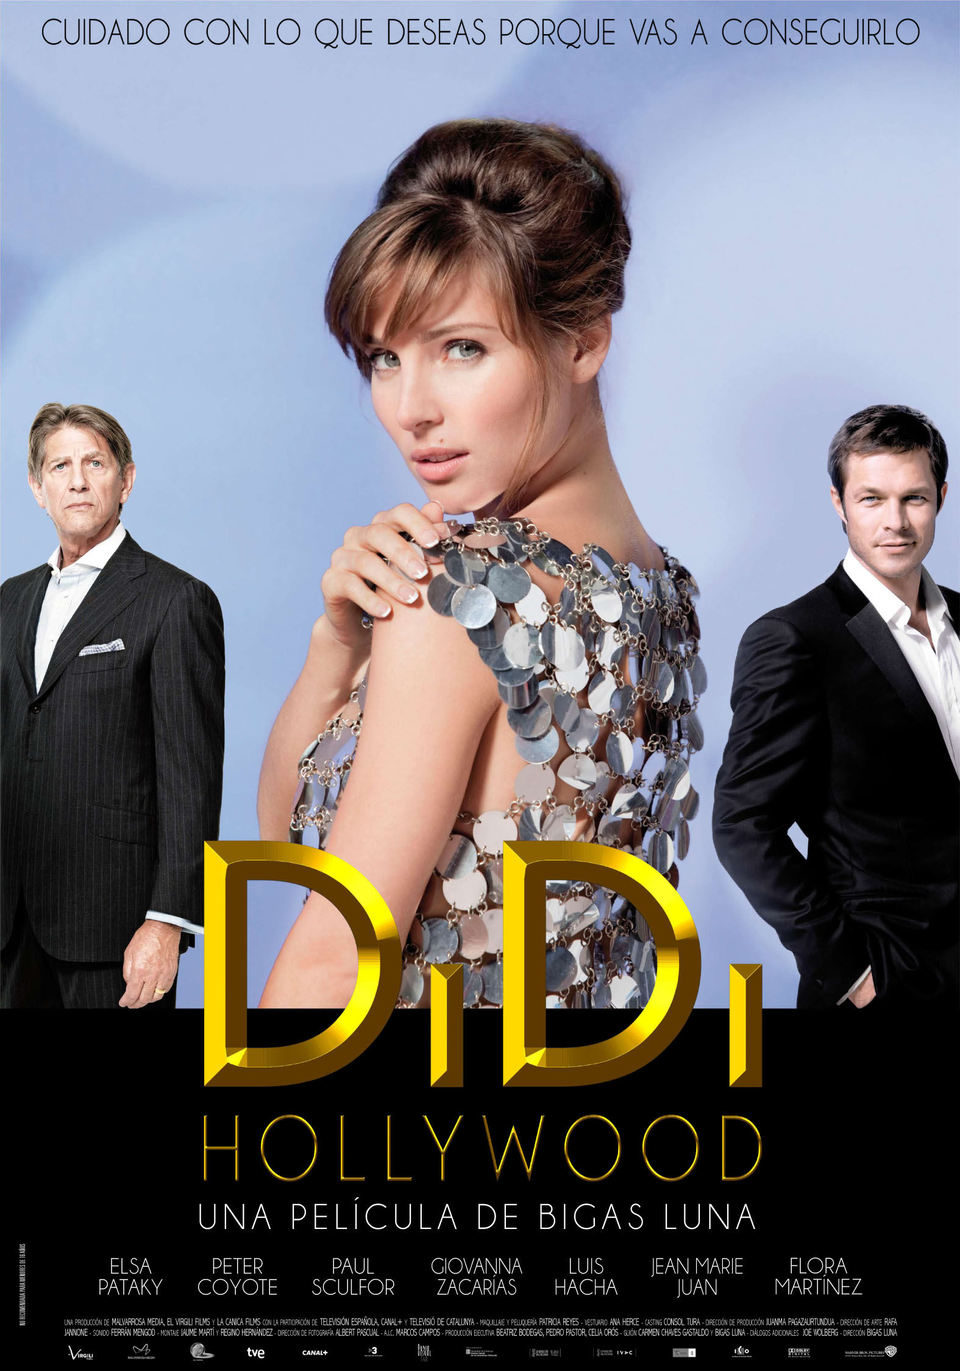 Poster of Didi Hollywood - España